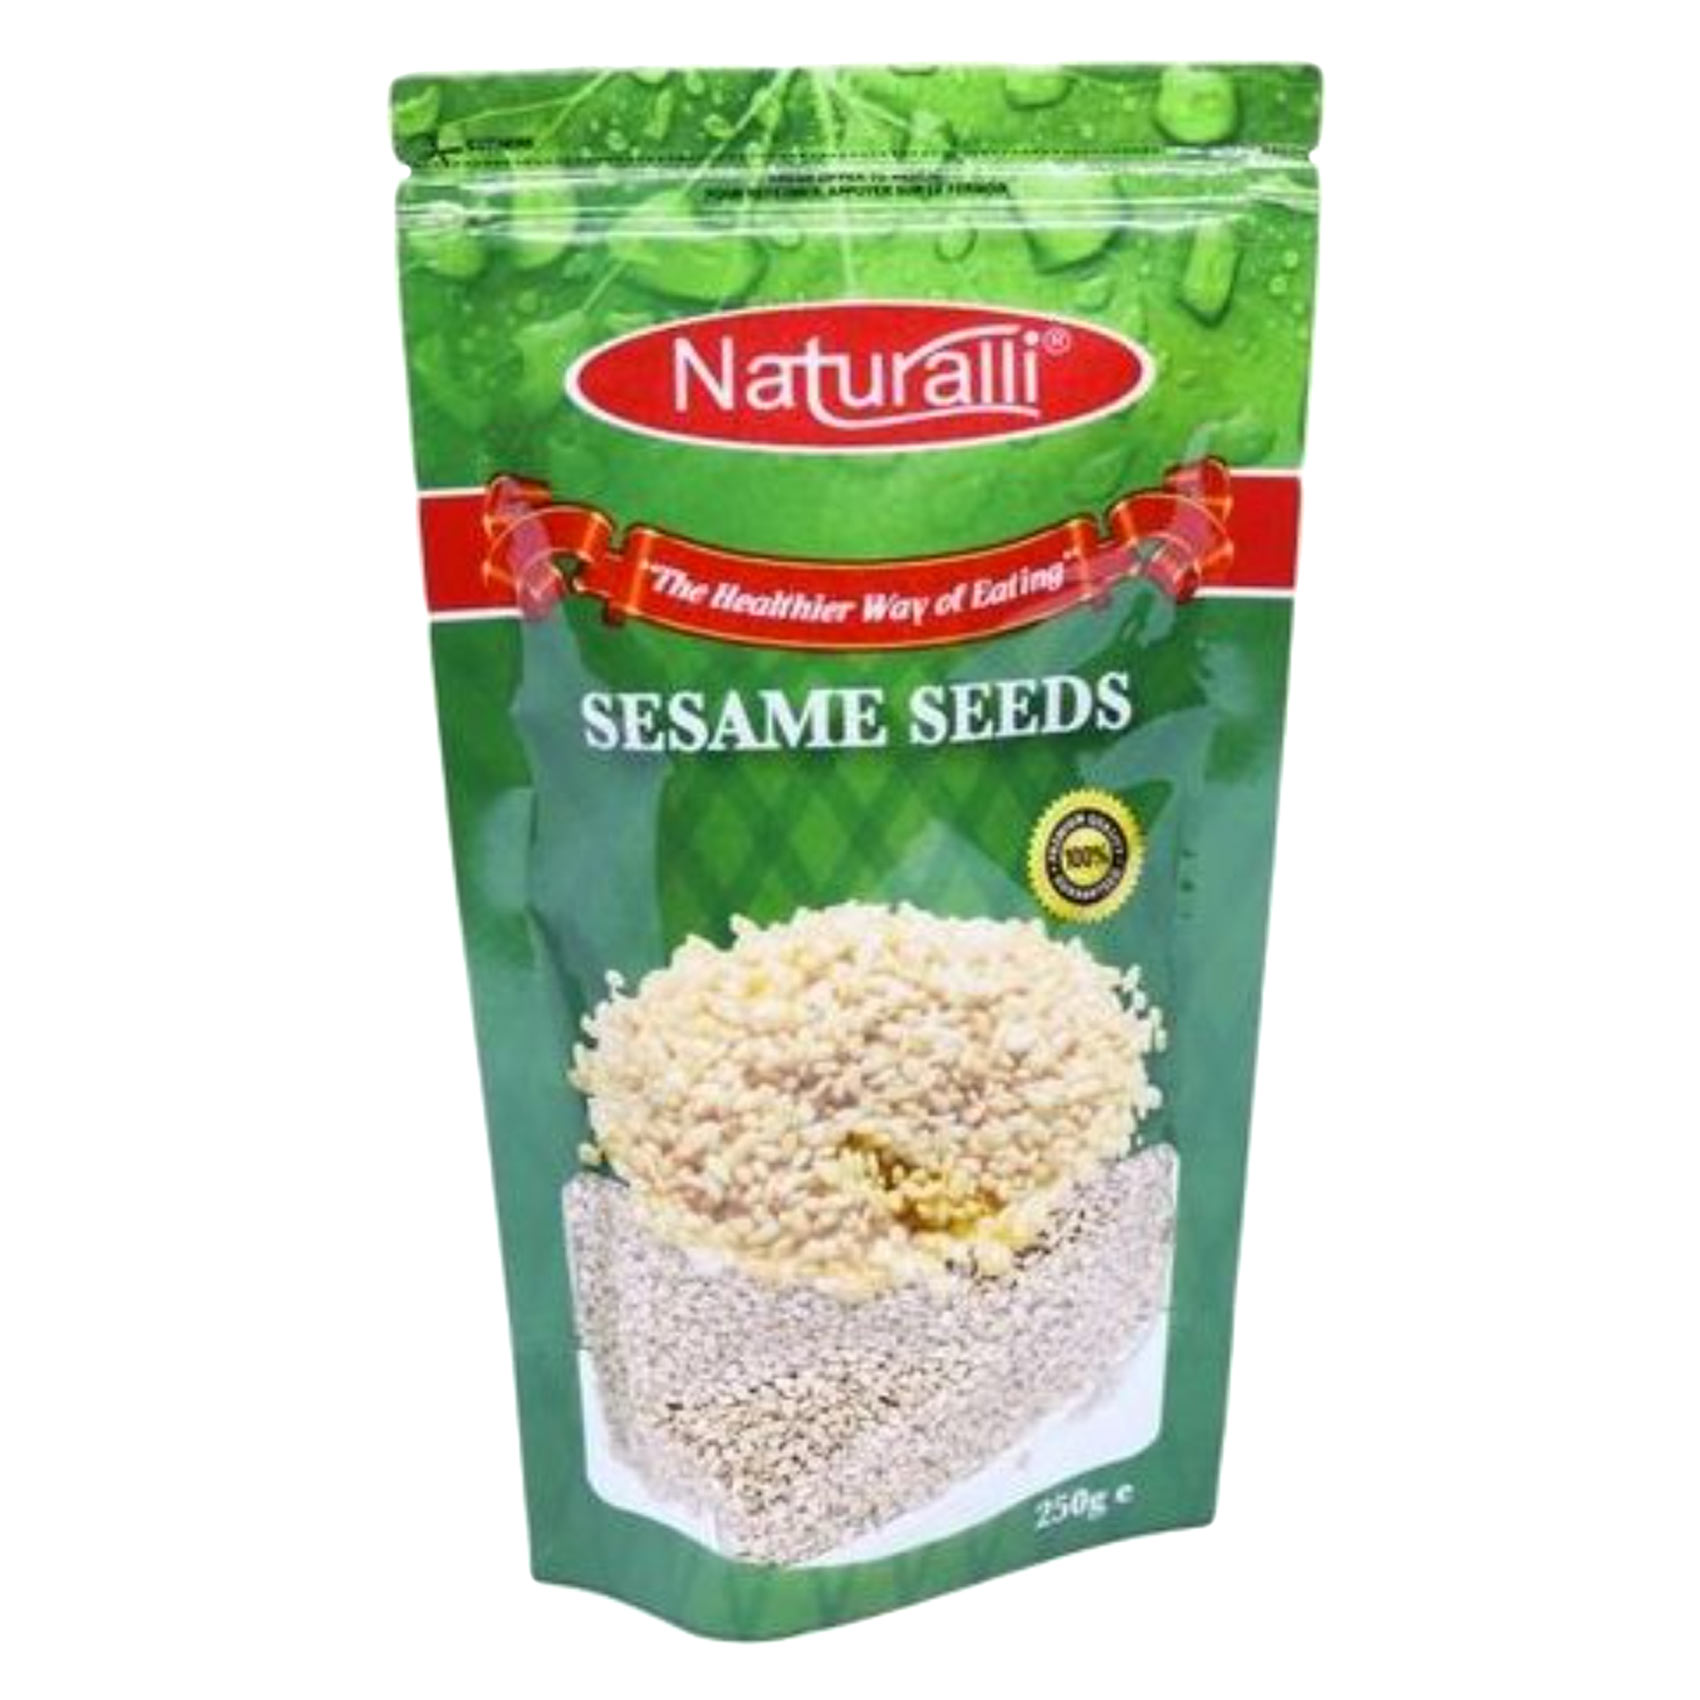 Naturalli Sesame Seeds 250g